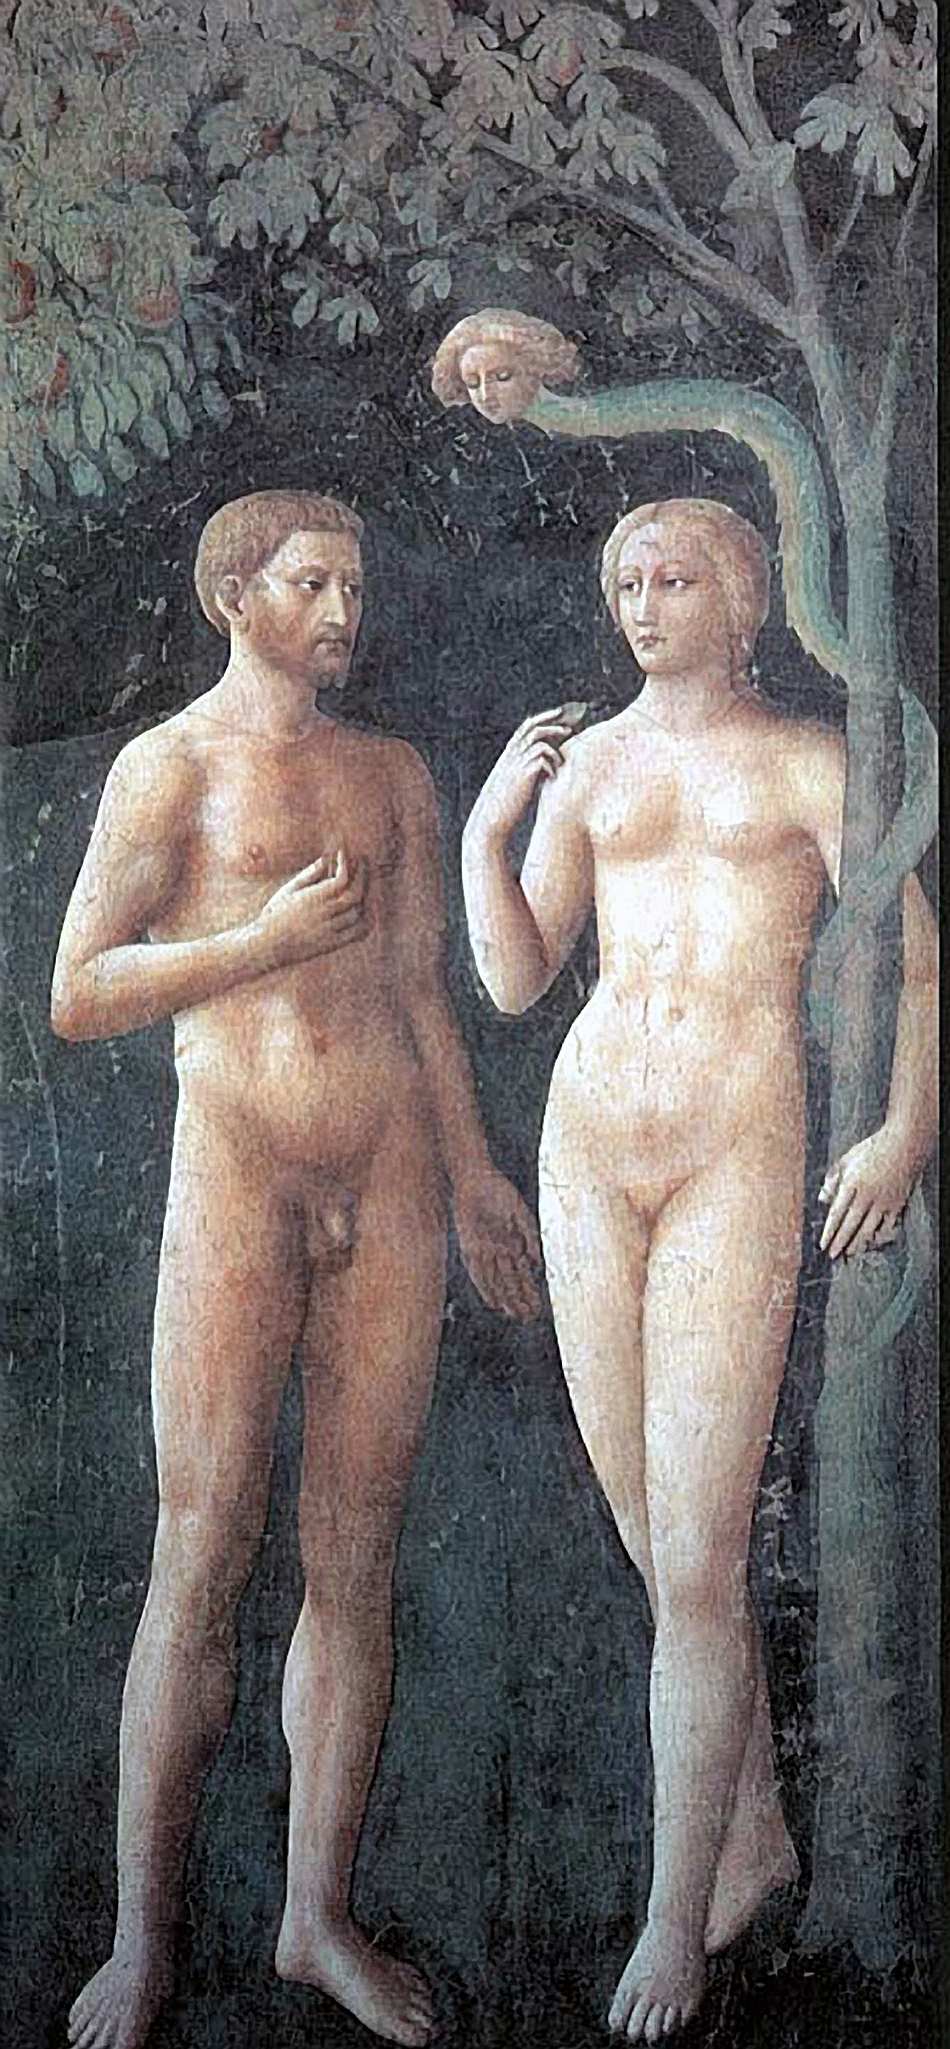 Adam And Eve by Masolino da Panicale